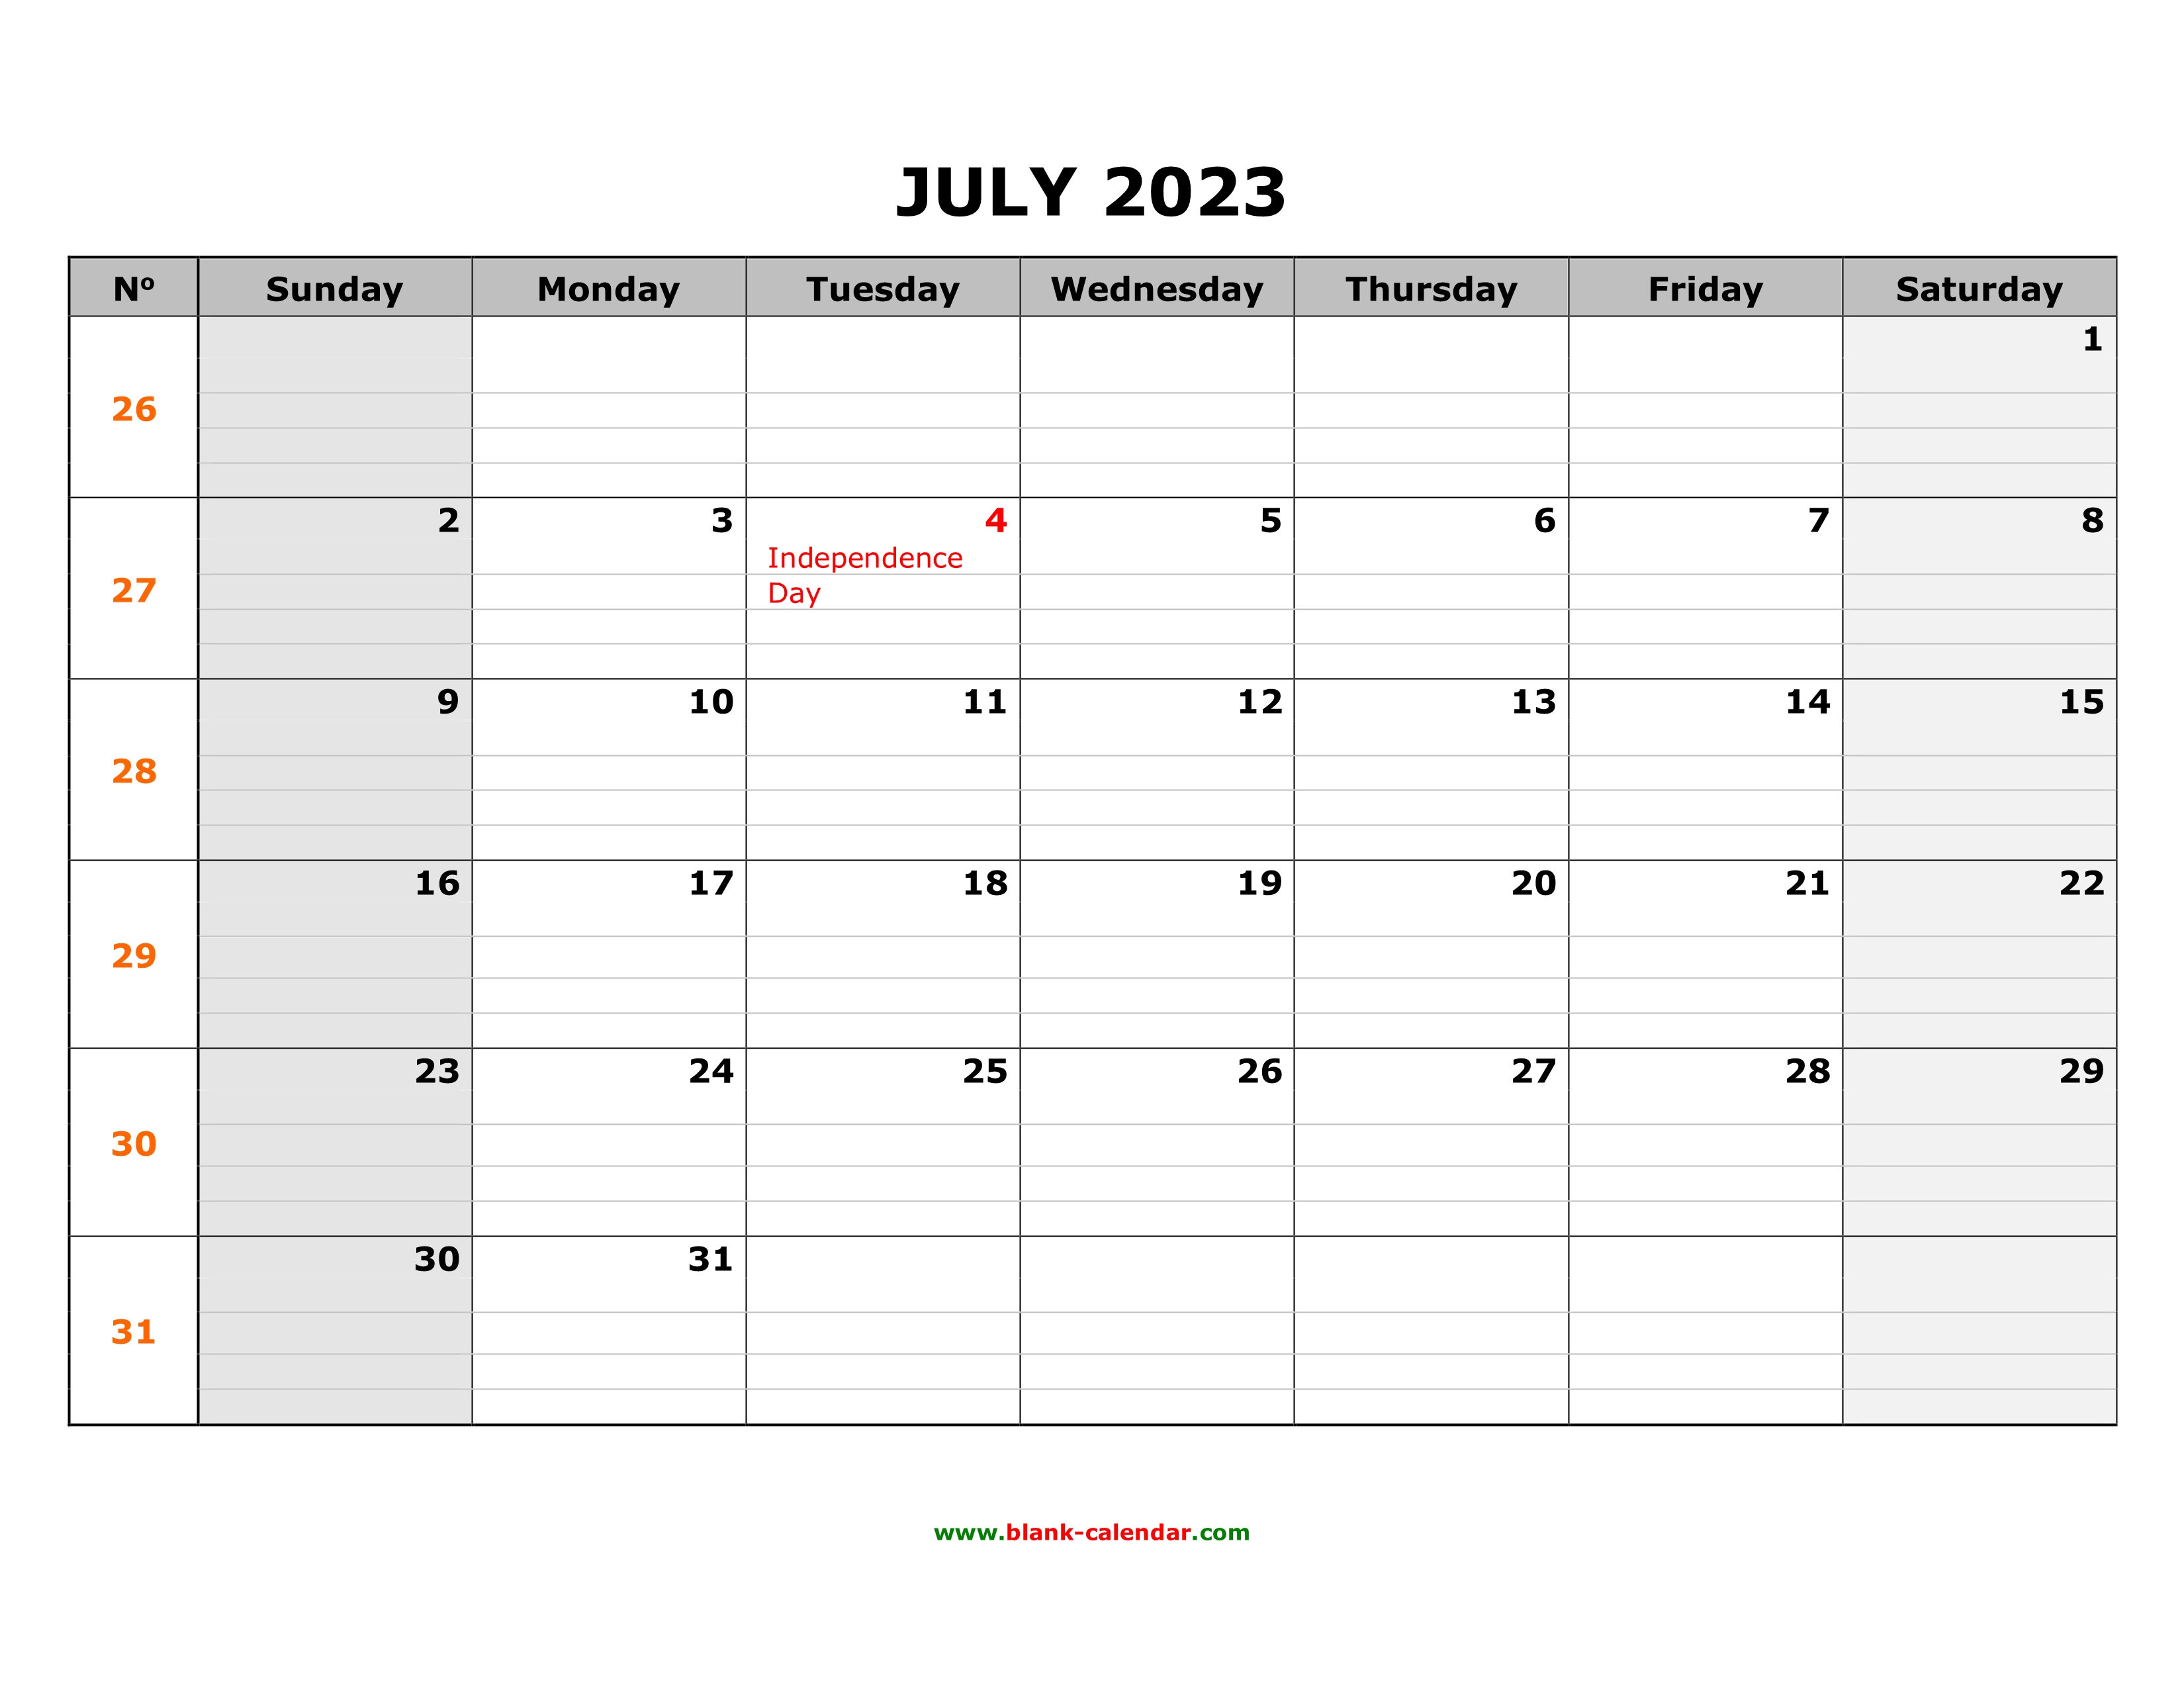 Saturday 15th July 2023 Blank Printable Calendar - PELAJARAN